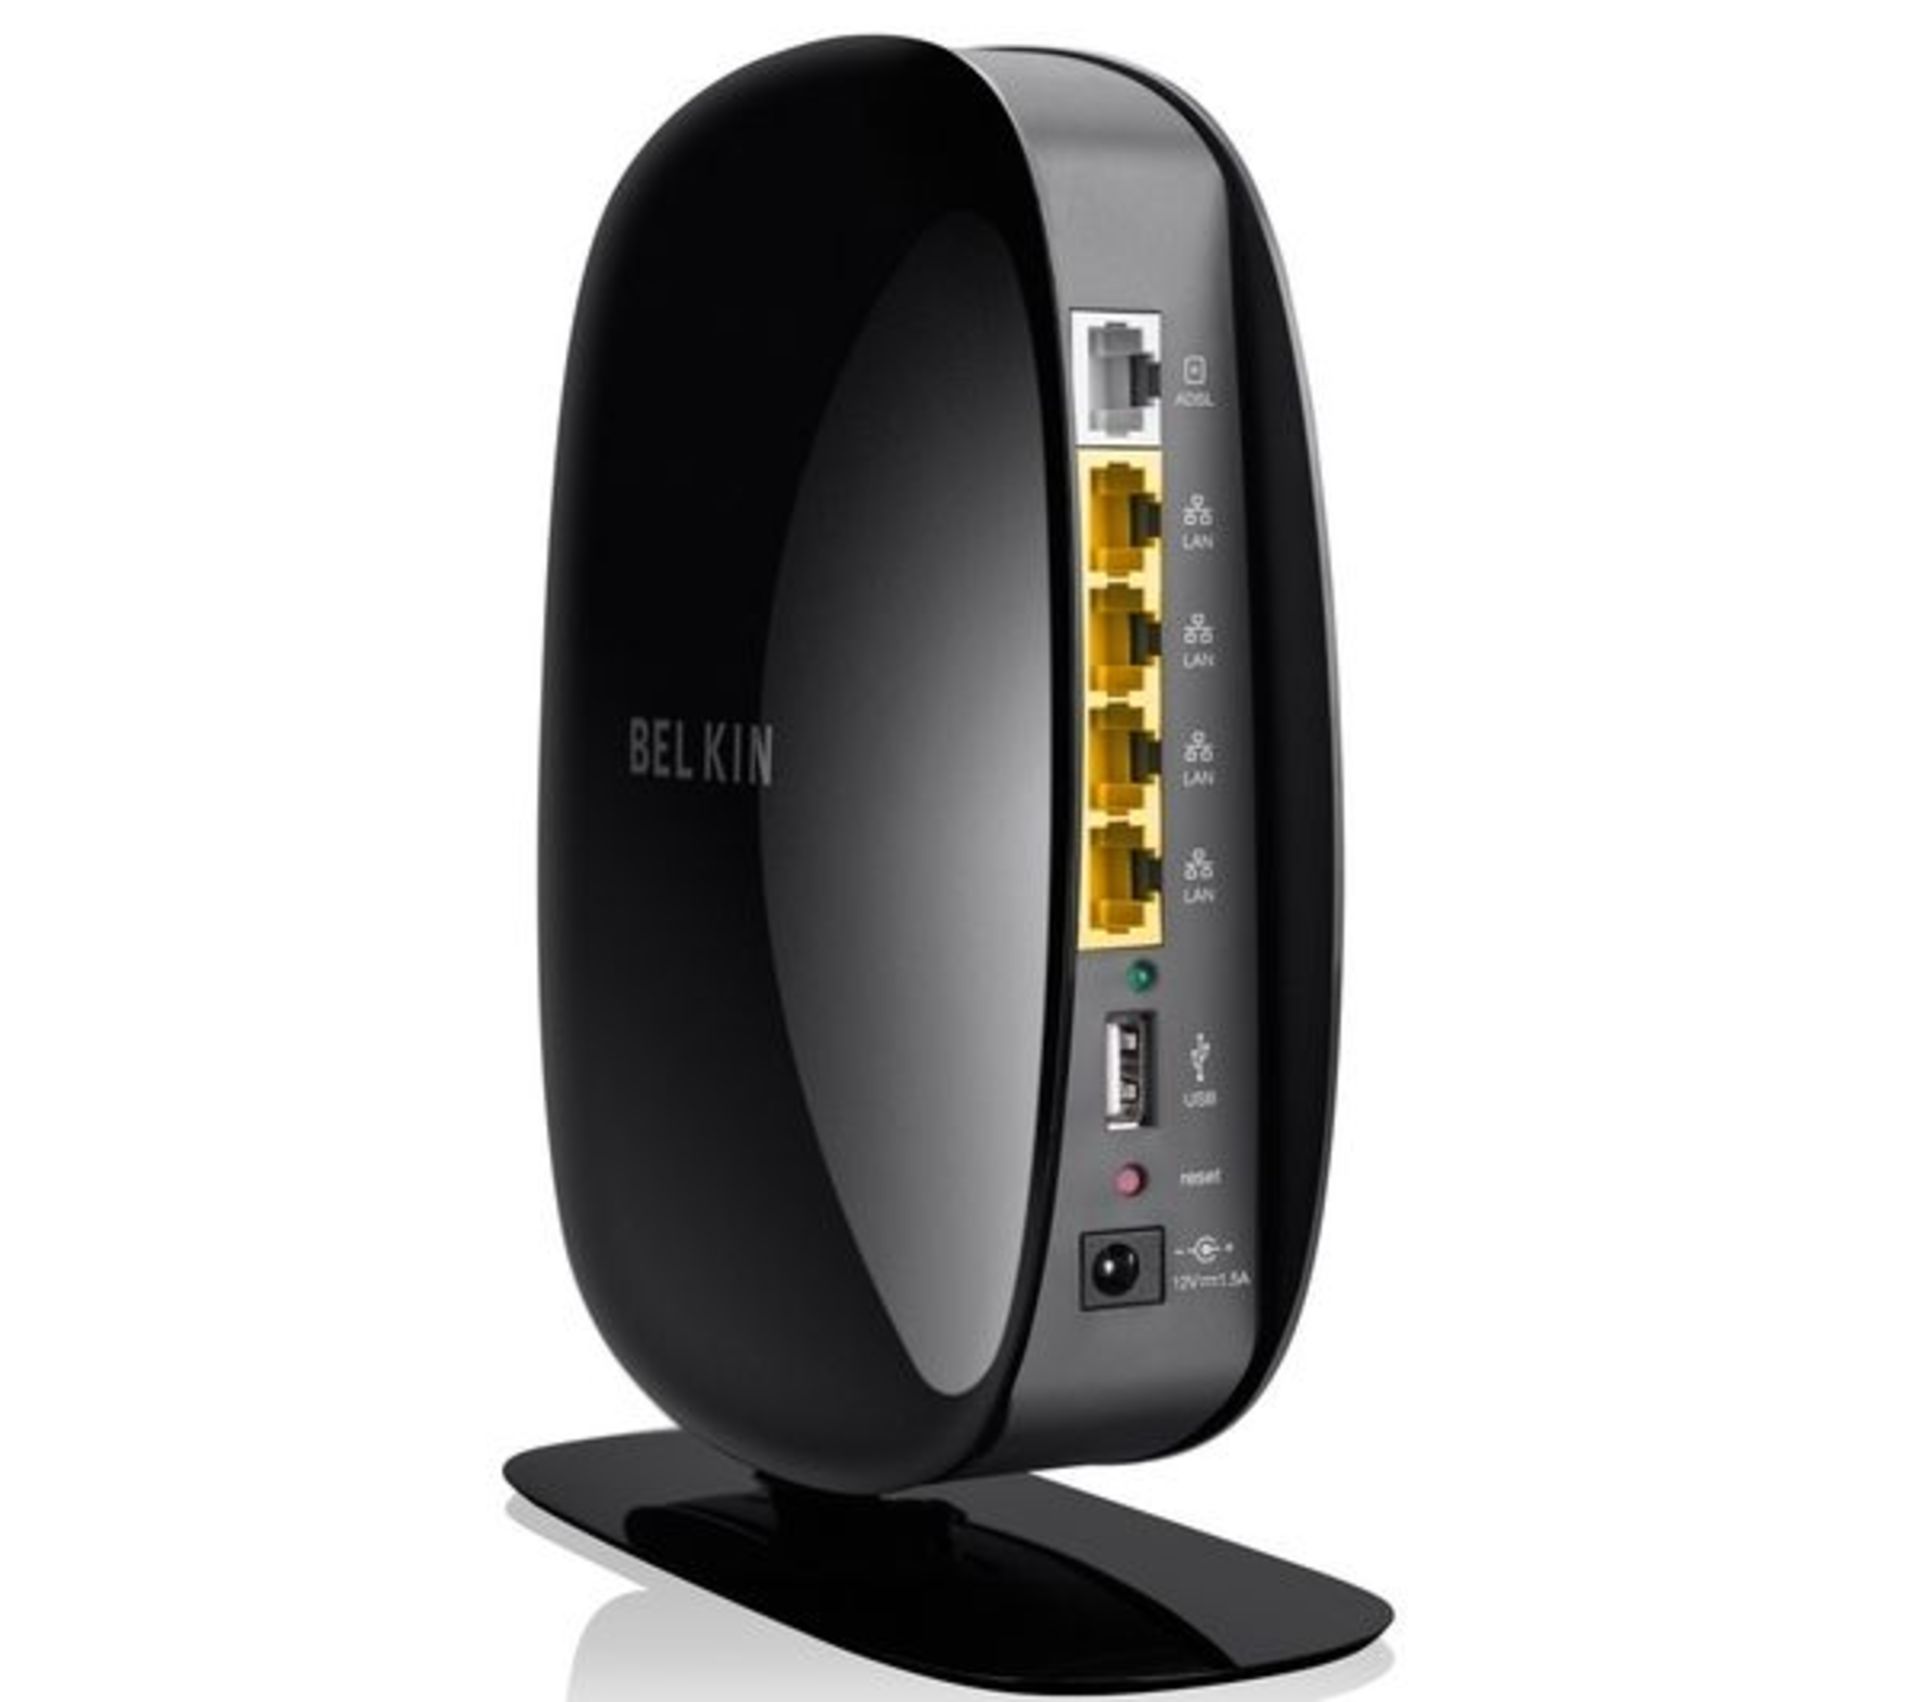 V Grade A Belkin N300 Wireless Modem Router - Easy set Up - WPA/WPA2/WEP Encryption - 4 port